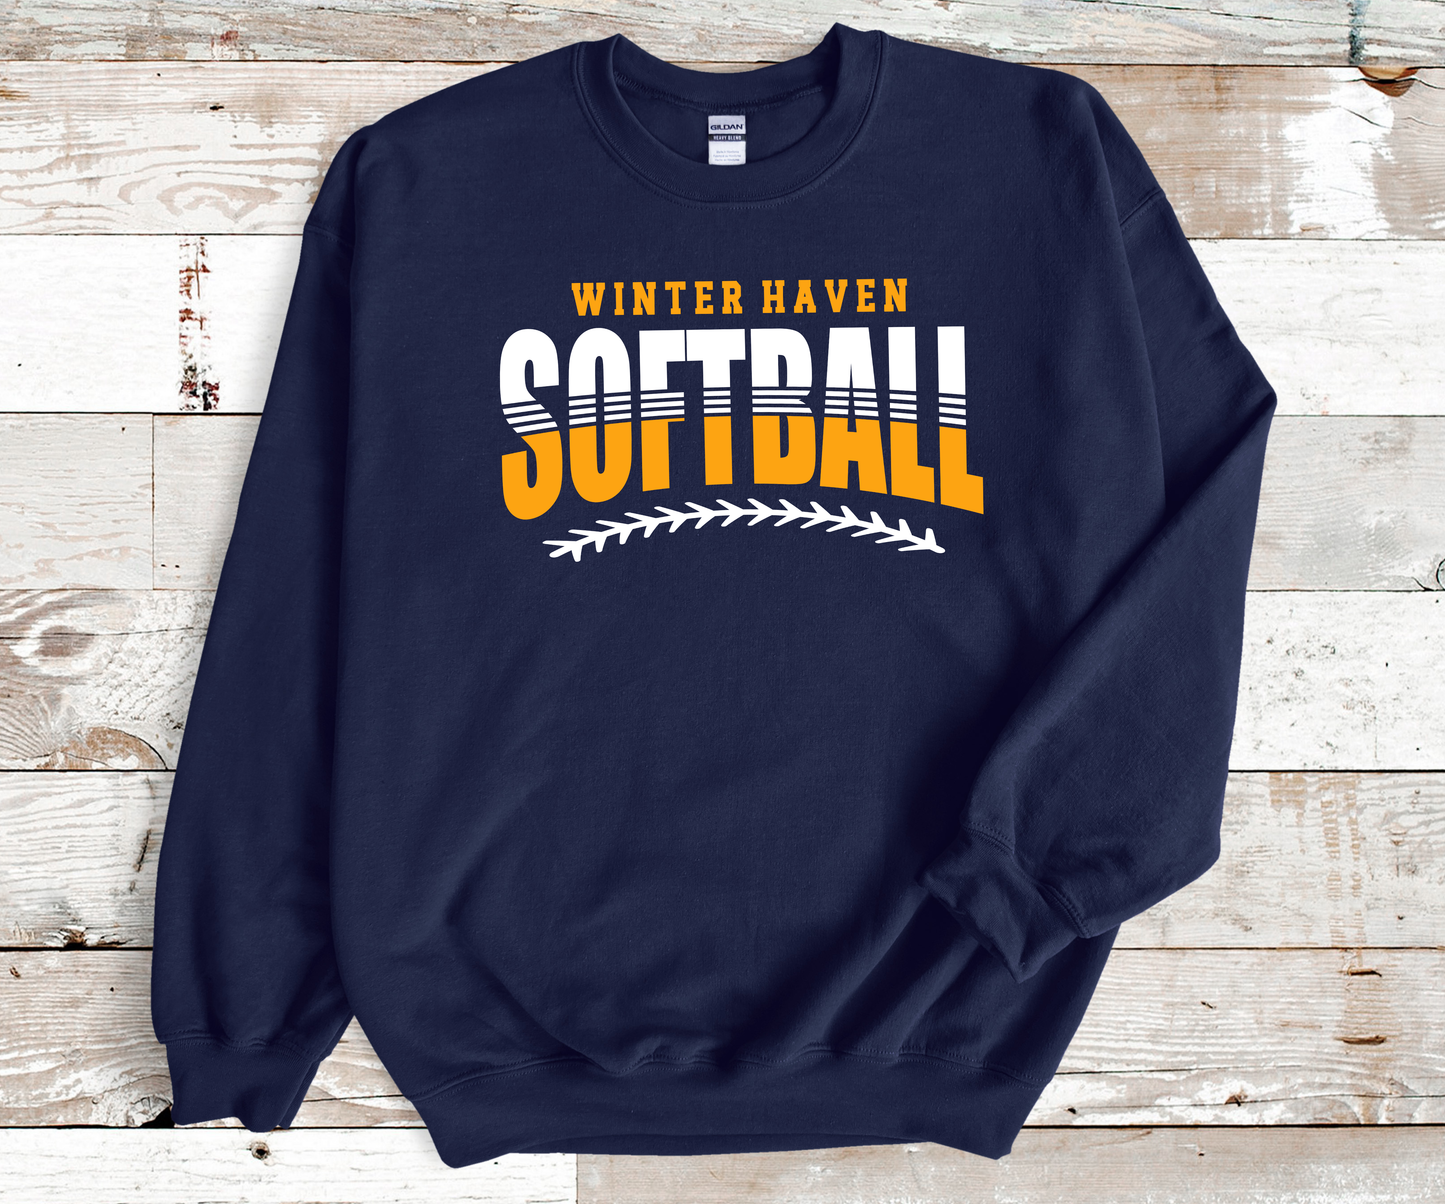 Winter Haven Softball Split Navy